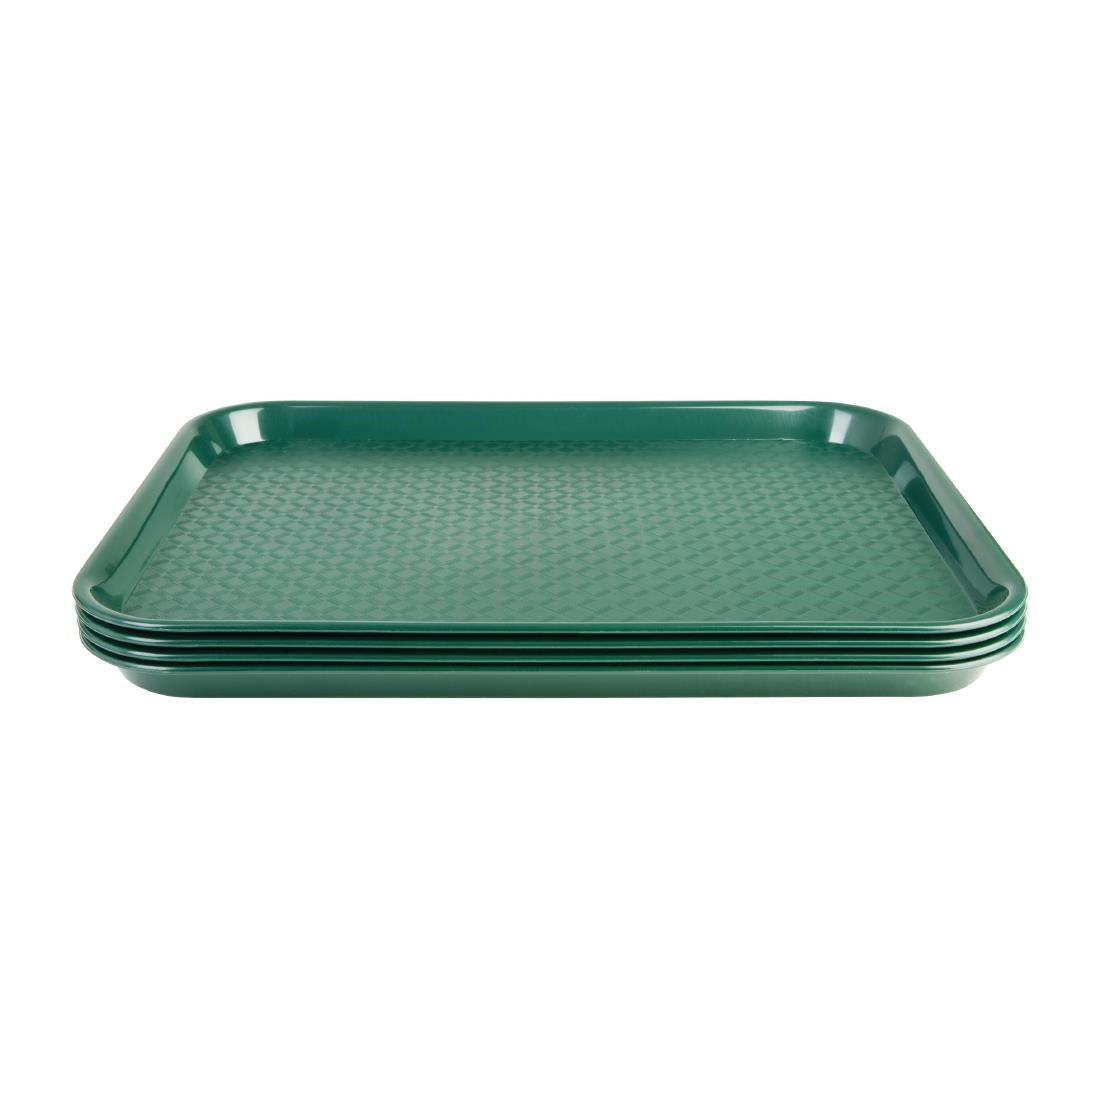 DP214 Kristallon Small Polypropylene Fast Food Tray Green 345mm JD Catering Equipment Solutions Ltd